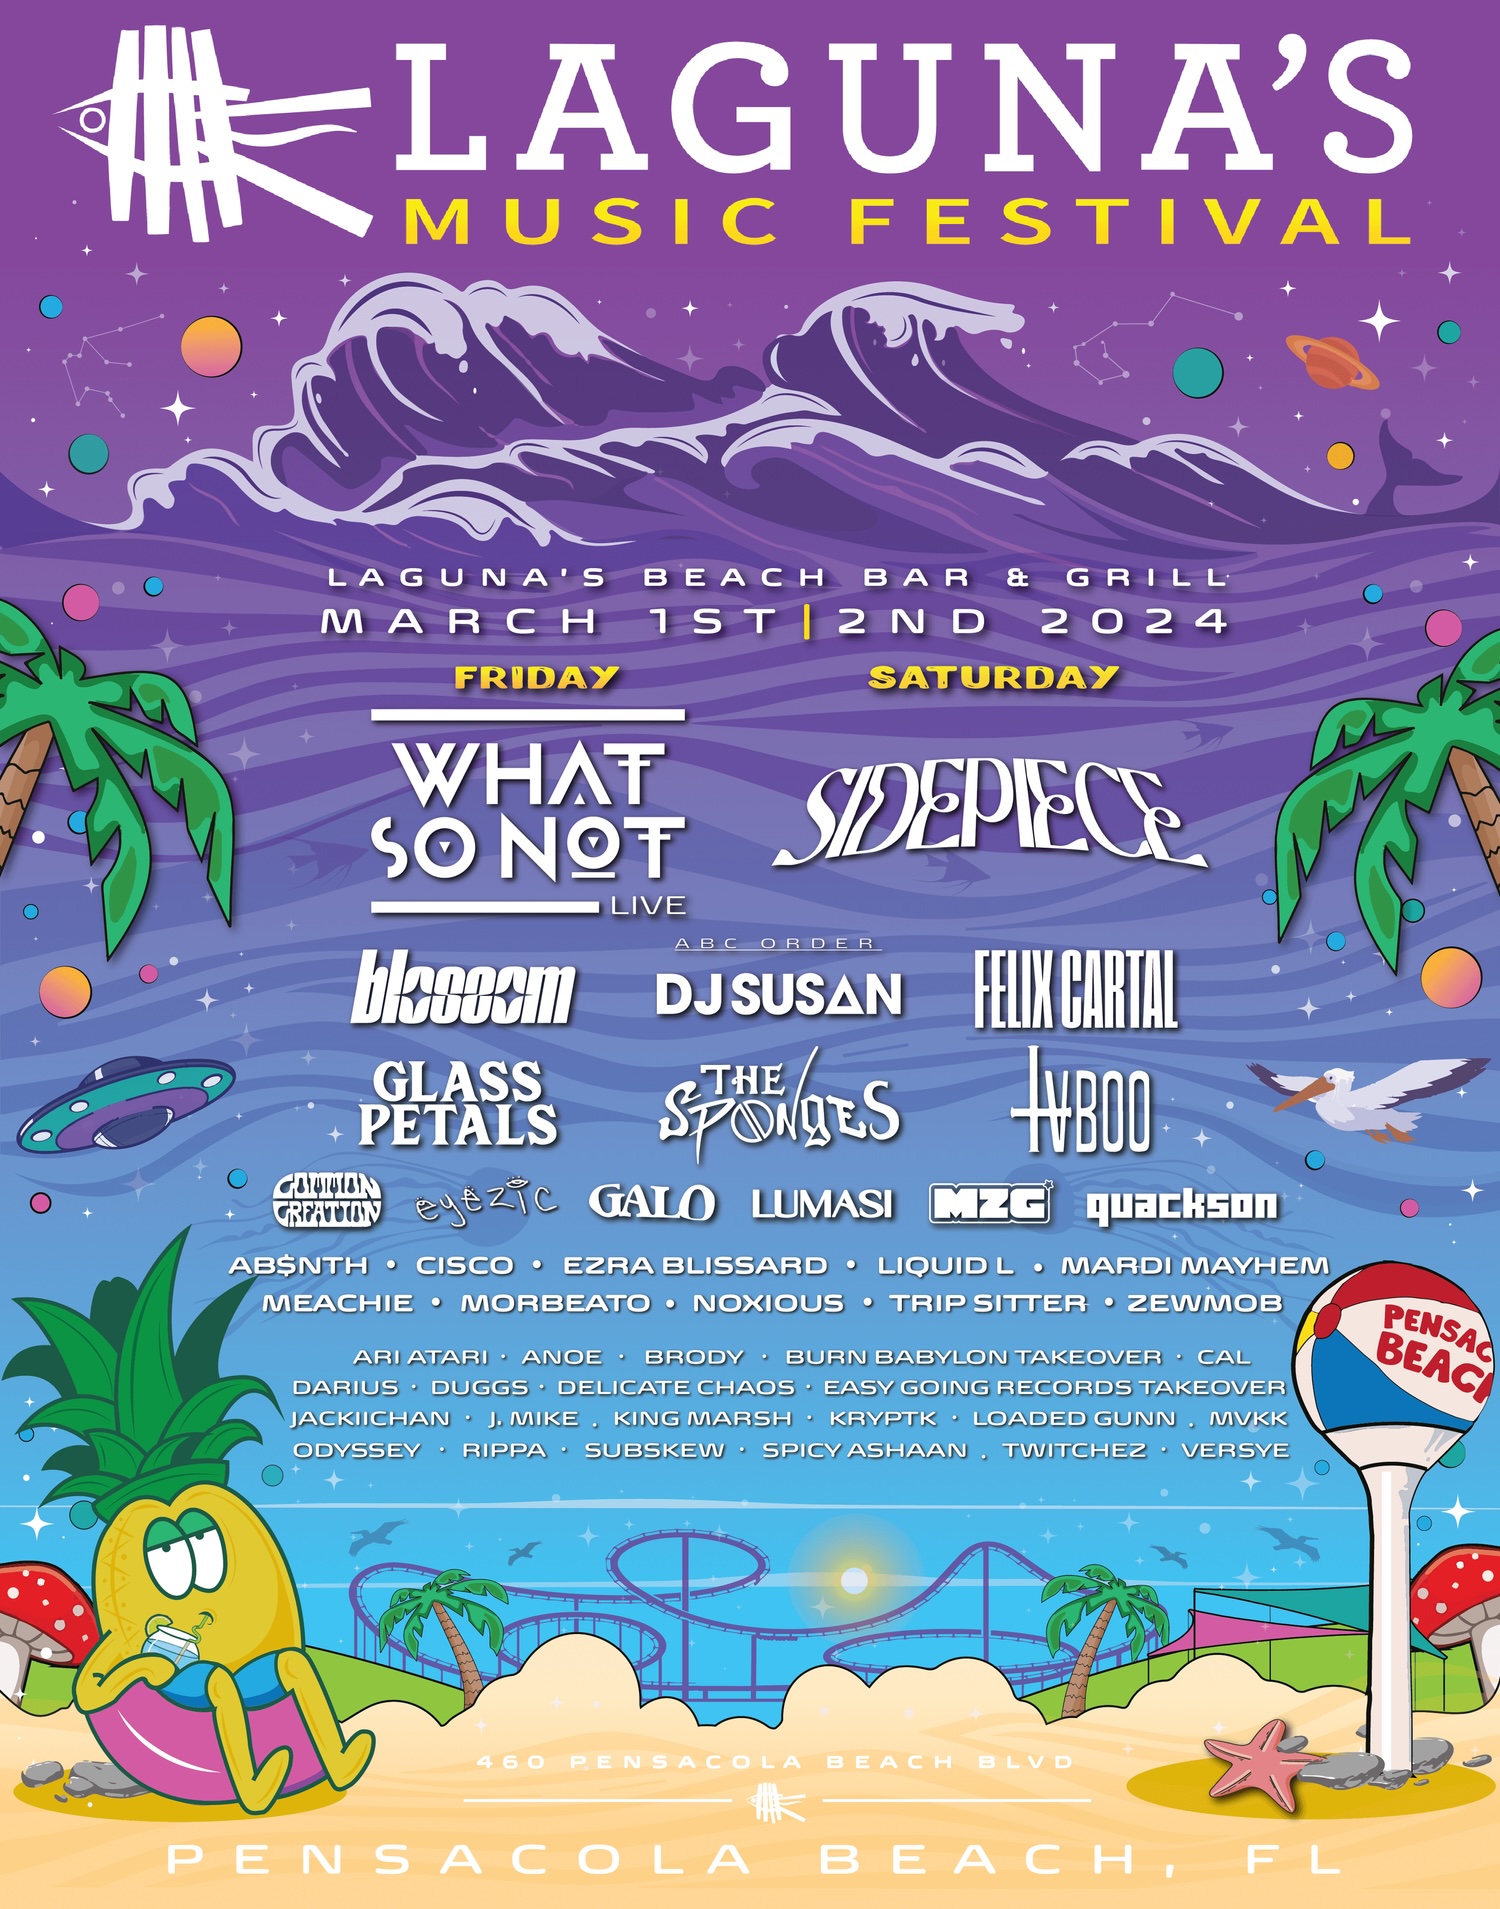 Laguna’s Music Festival lineup poster